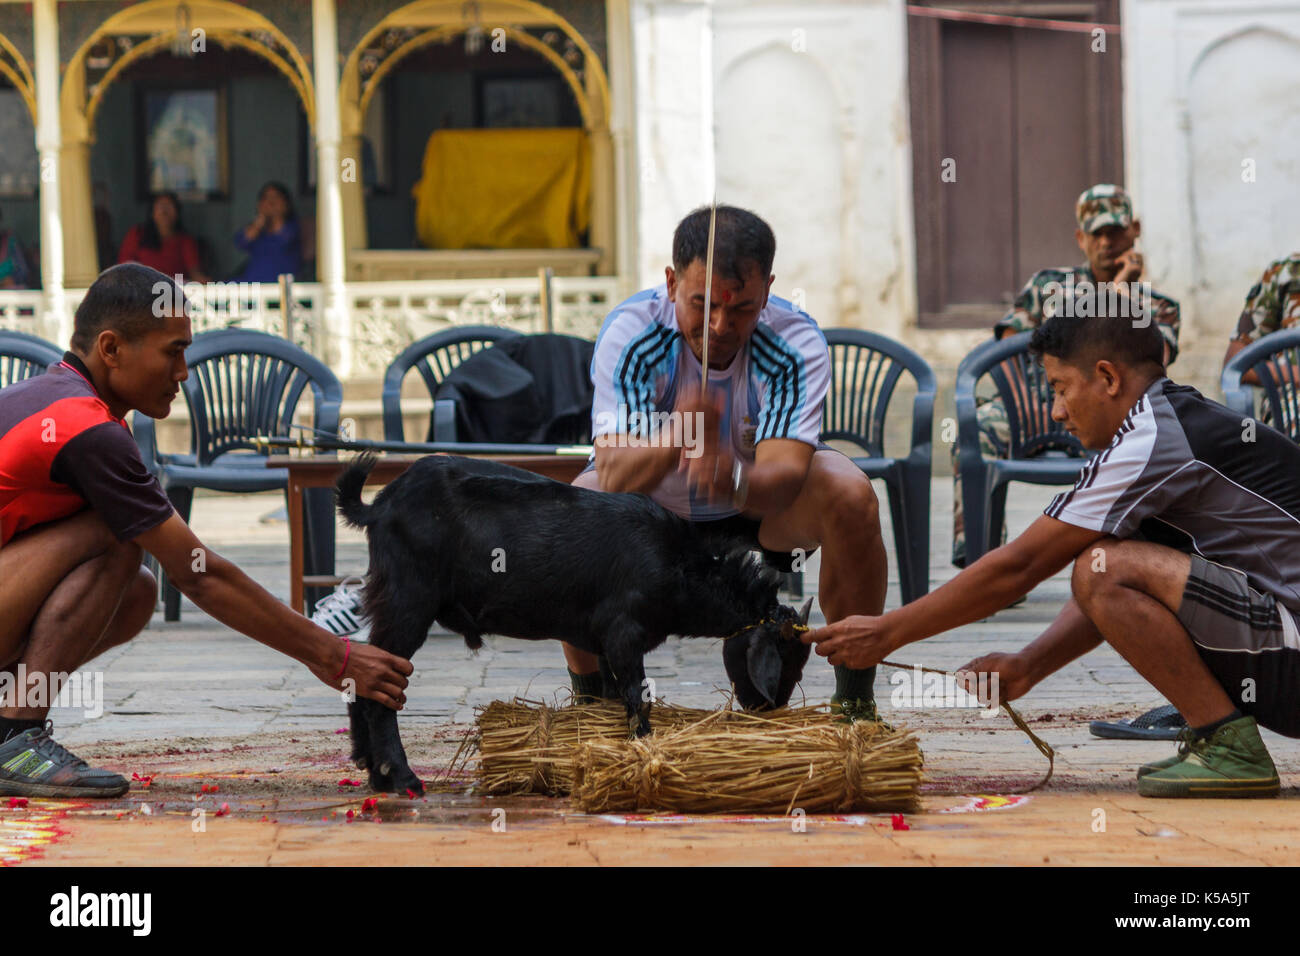 KATHMANDU, NEPAL - 9/26/2015: A goat is sacrificed during a military ceremony at Durbar Square in Kathmandu, Nepal. Stock Photo